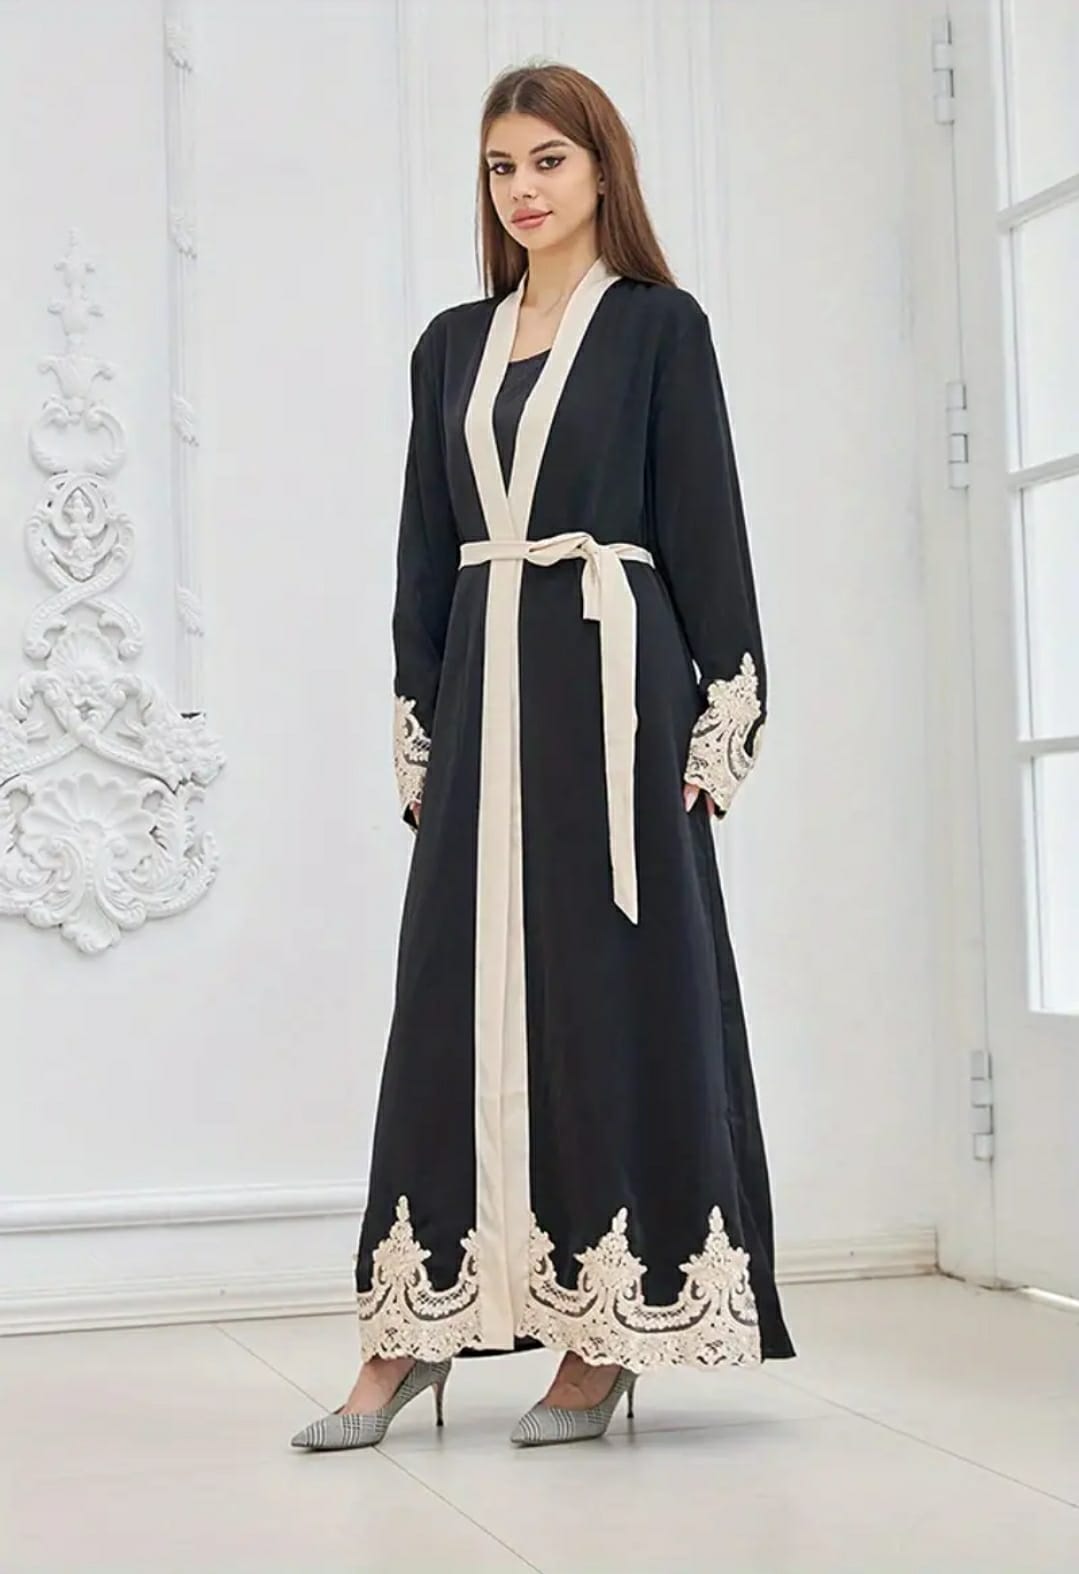 Samaira's Contrast Lace Open Front Kaftan Abaya, Elegant Long Sleeve Maxi Dress, Women's Clothing